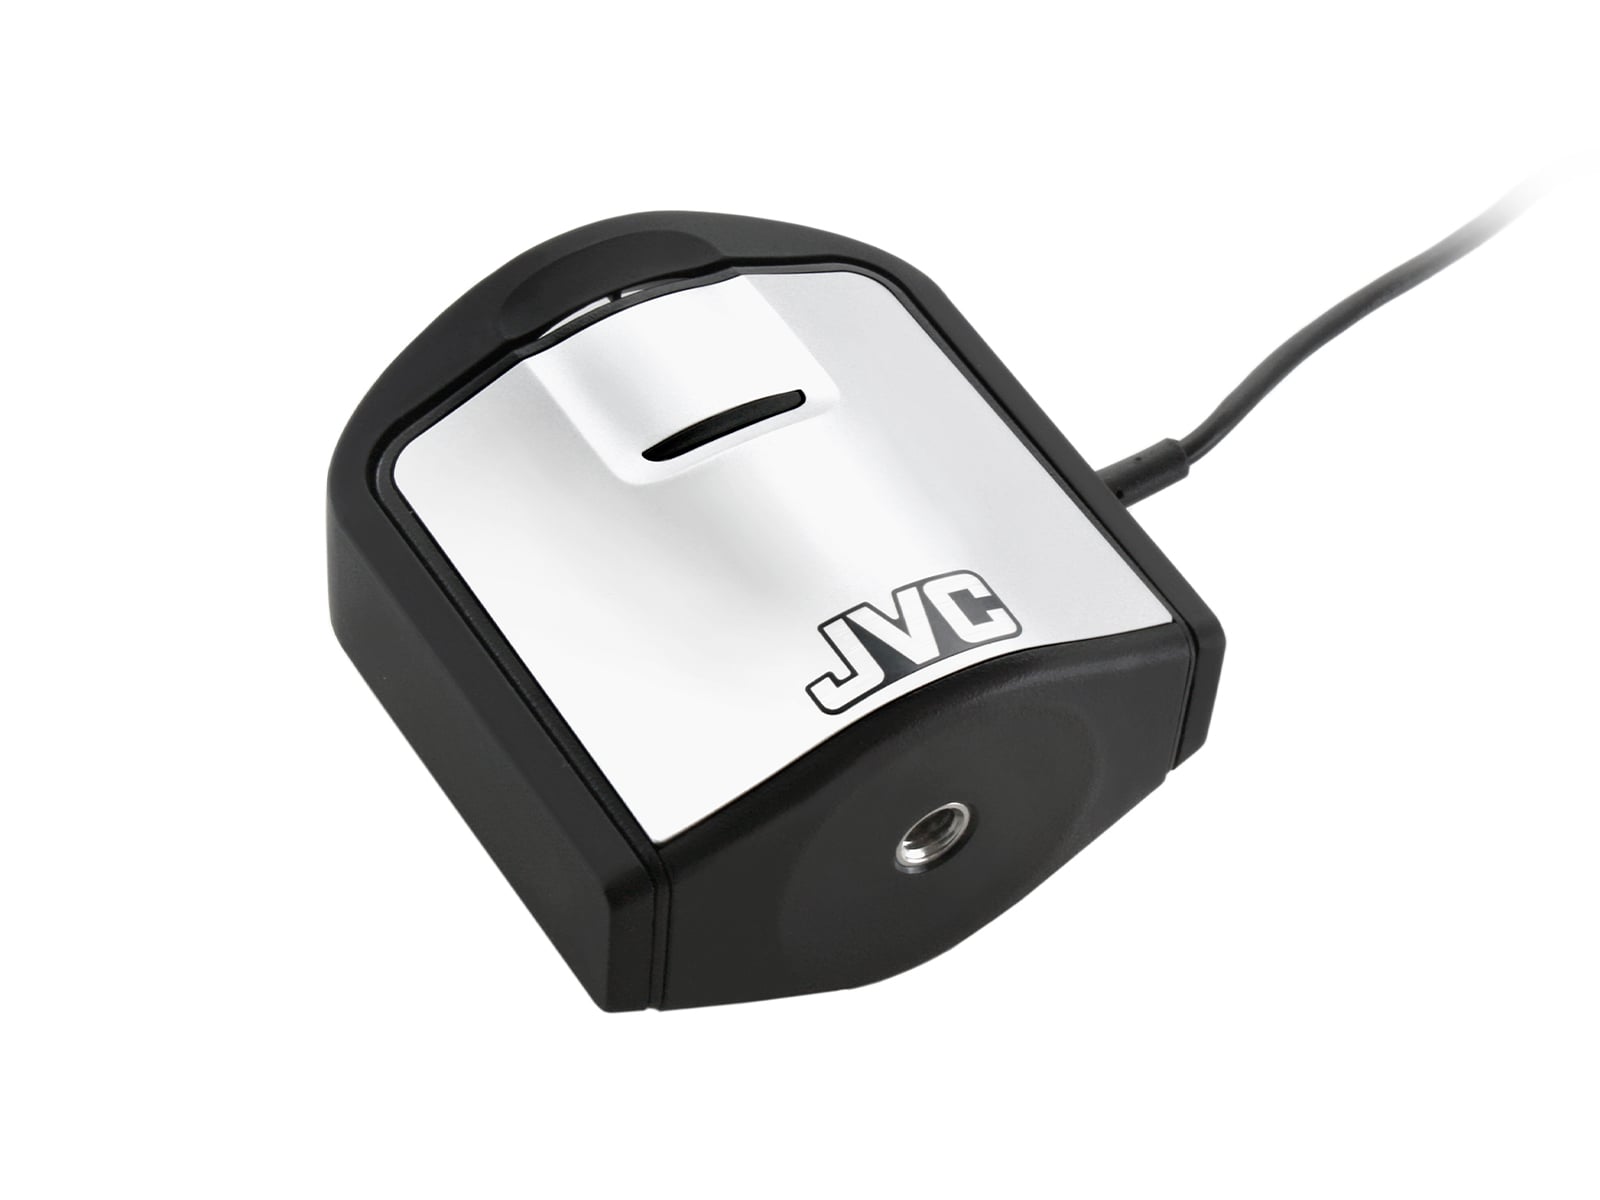 JVC Totoku Medivisor NX Calibration Sensor Kit with QA software (CAL-016) Monitors.com 